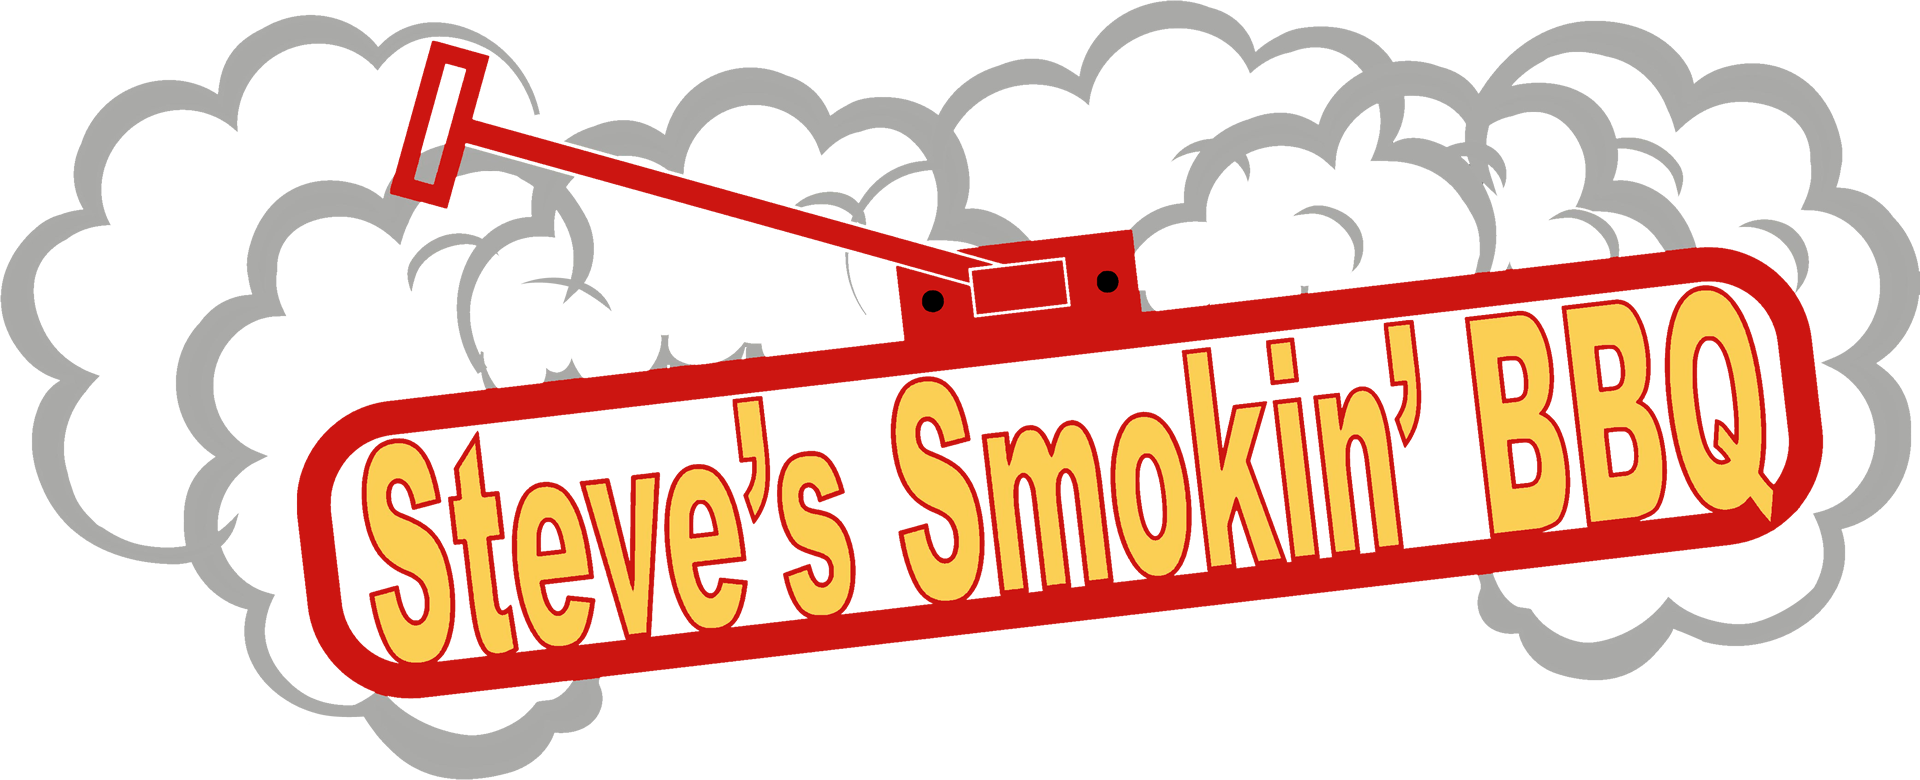 Steve's Smokin' BBQ of Traverse City, Michigan